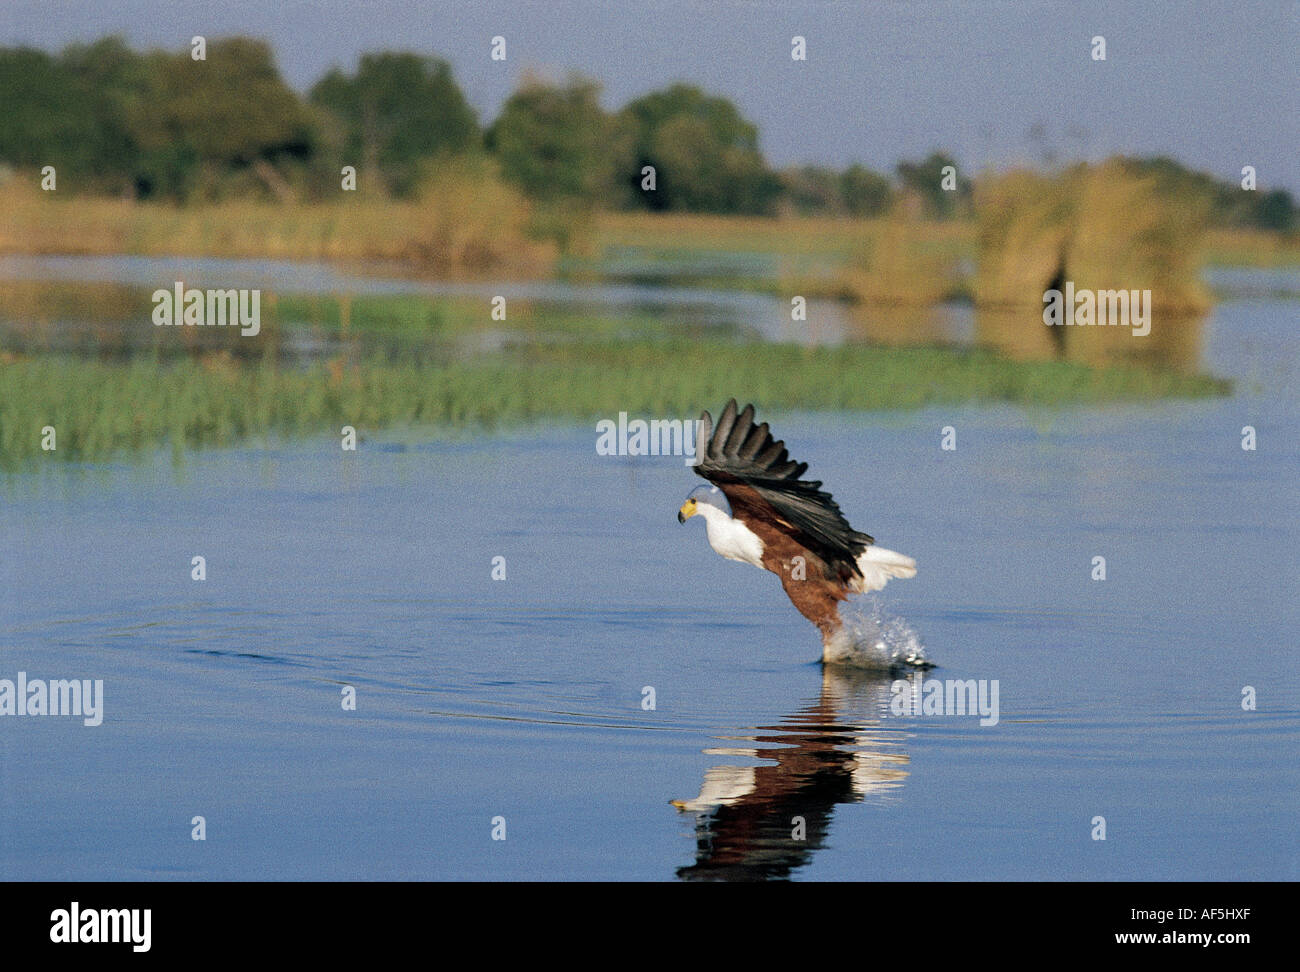 Águila pescadora humillarse para tratar de atrapar un pez del agua del Delta del Okavango Botswana África meridional Foto de stock